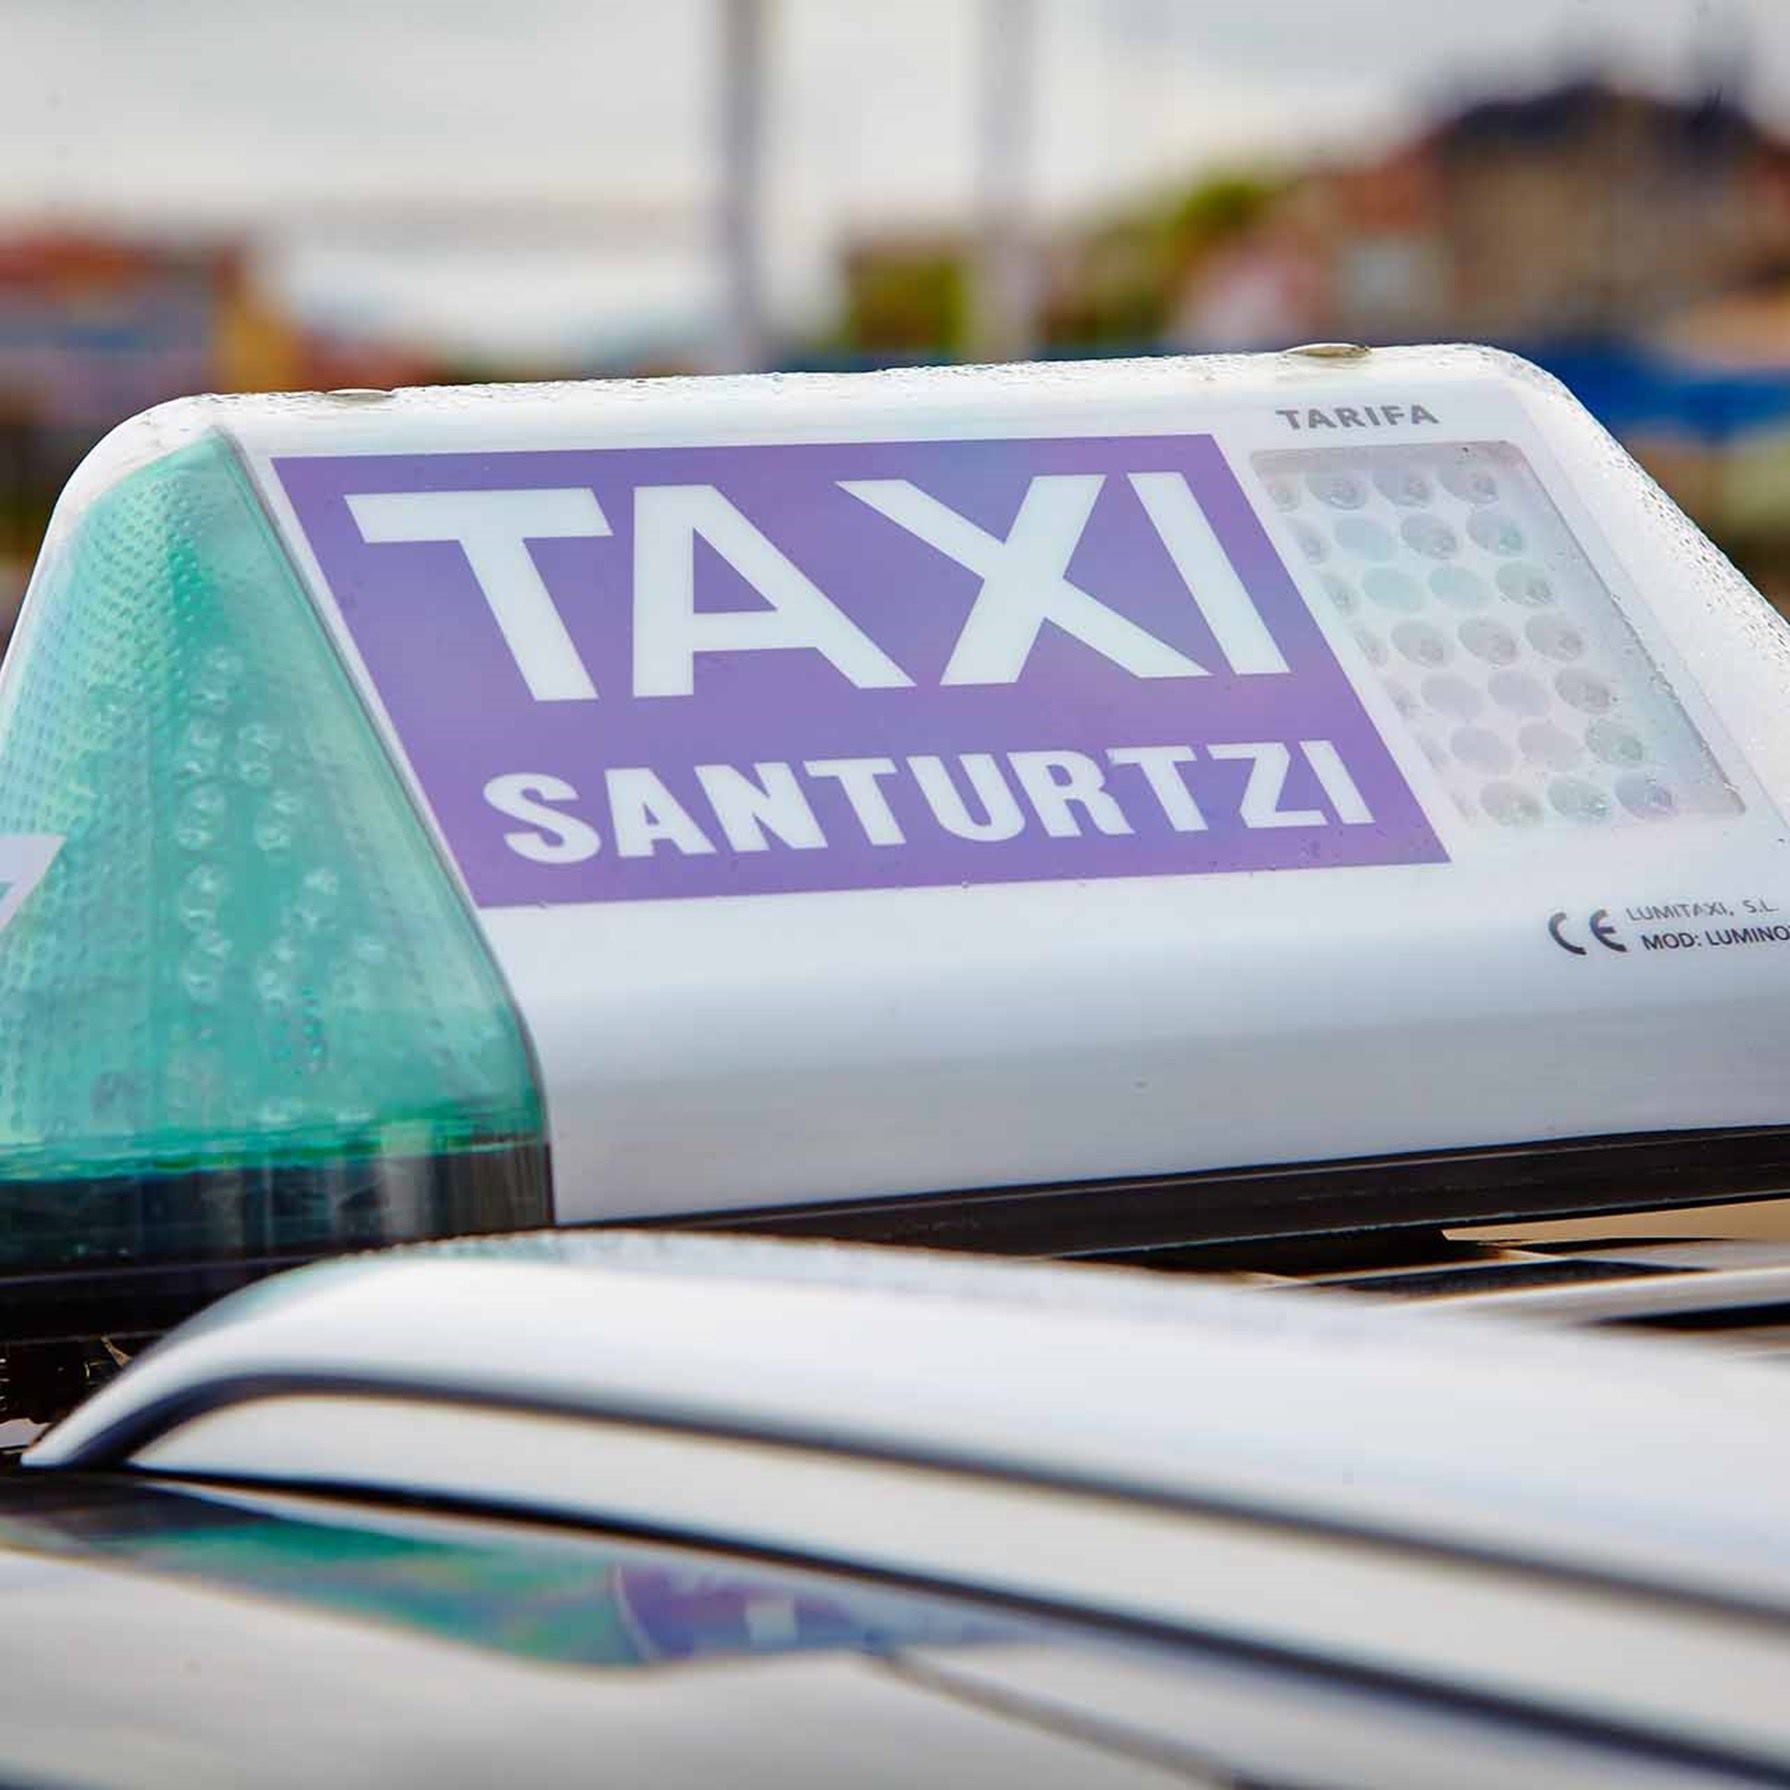 Taxi Santurtzi